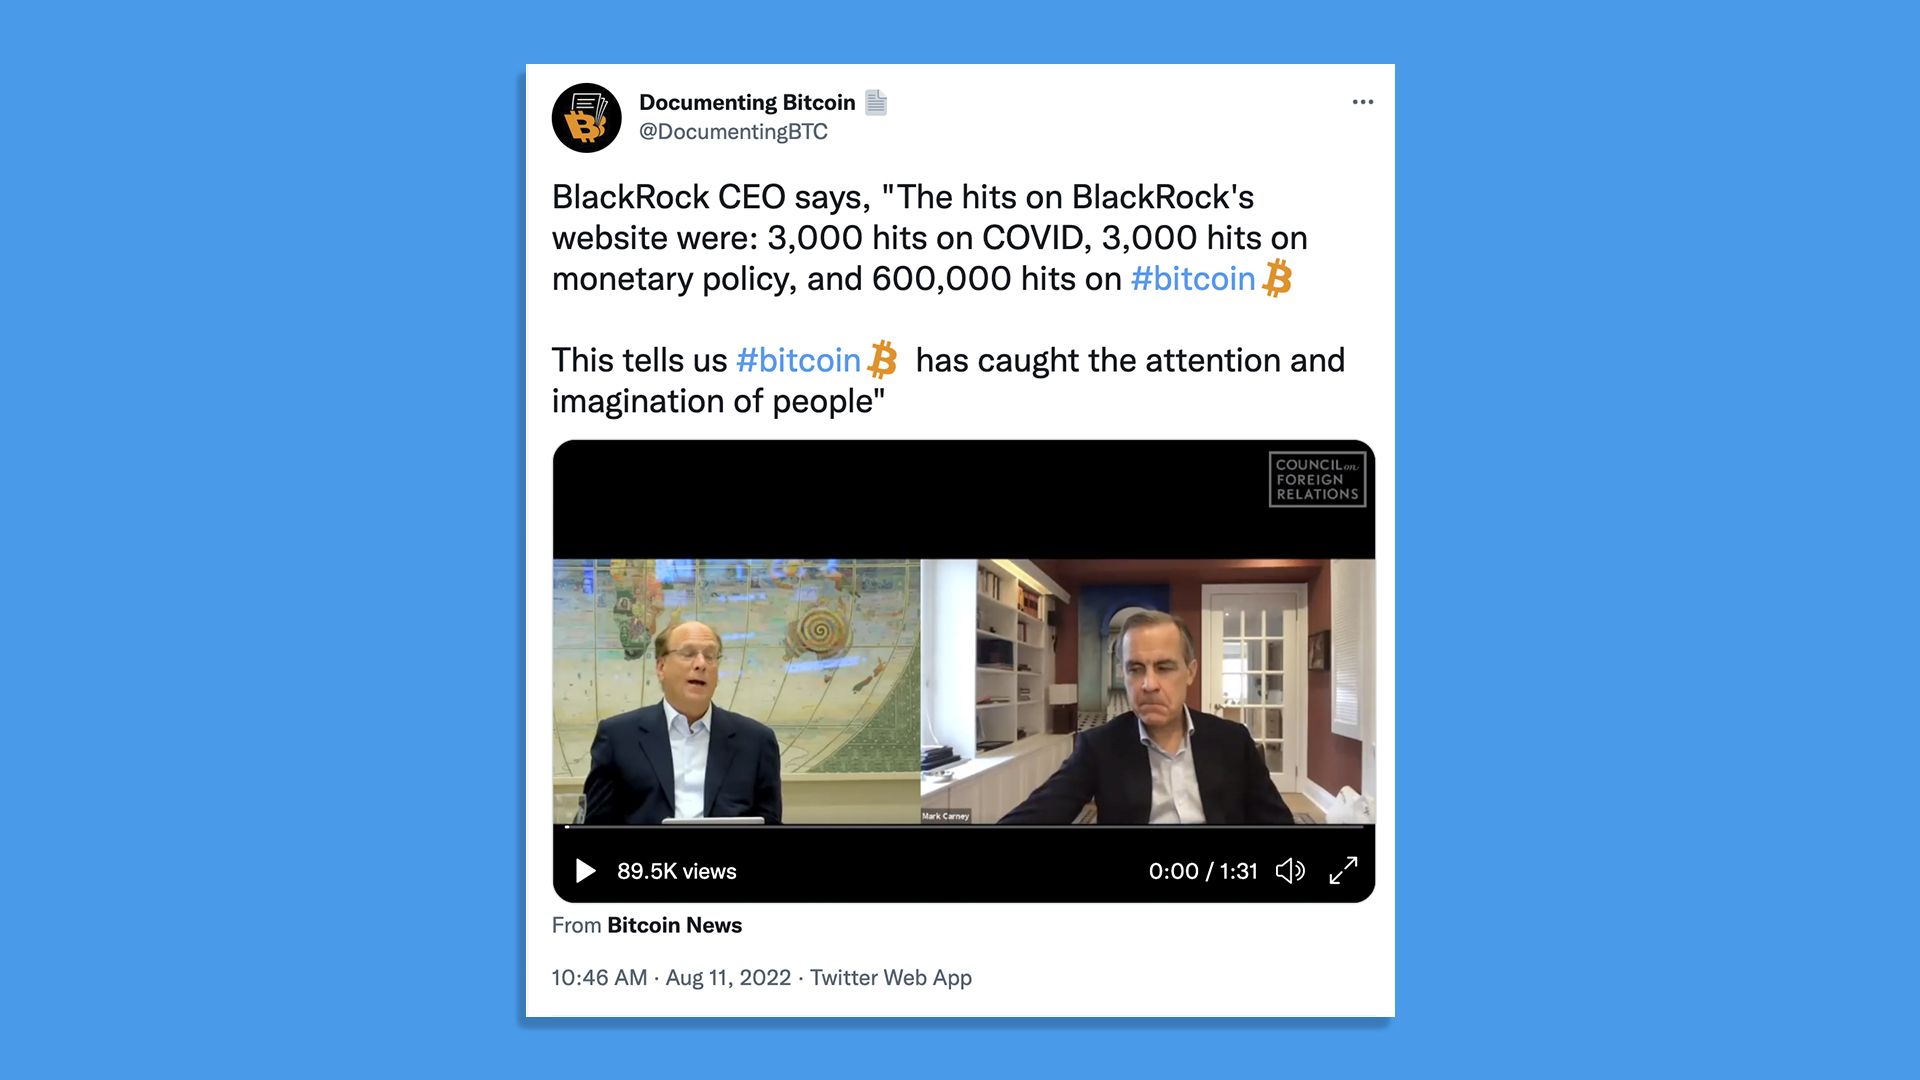 Tweet saying "BlackRock CEO says "The hits on BlackRock's website were: 3,000 hits on Covid... 600,000 hits on bitcoin.